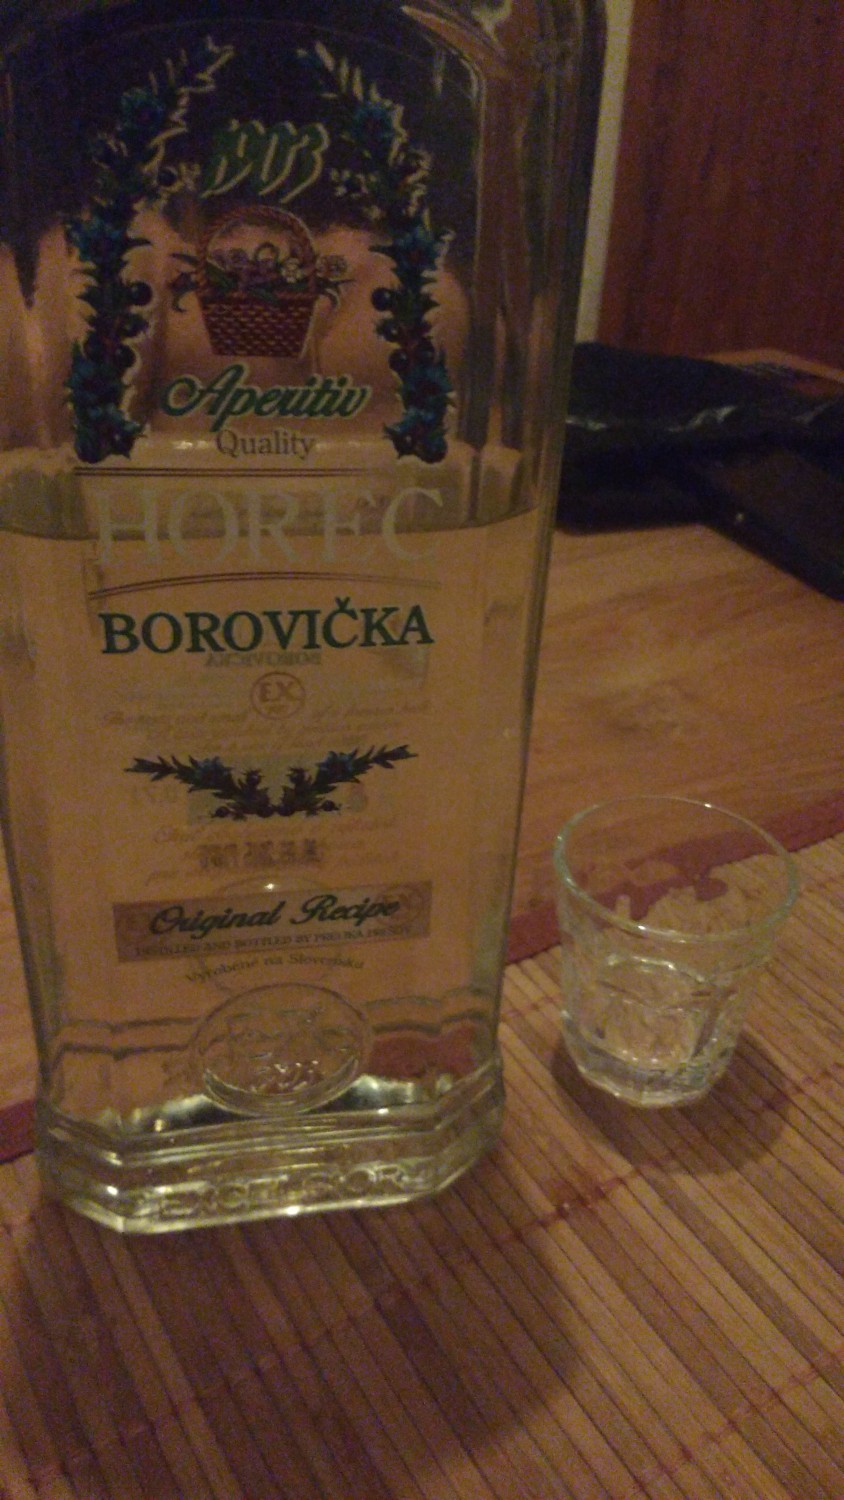 Borovitchka